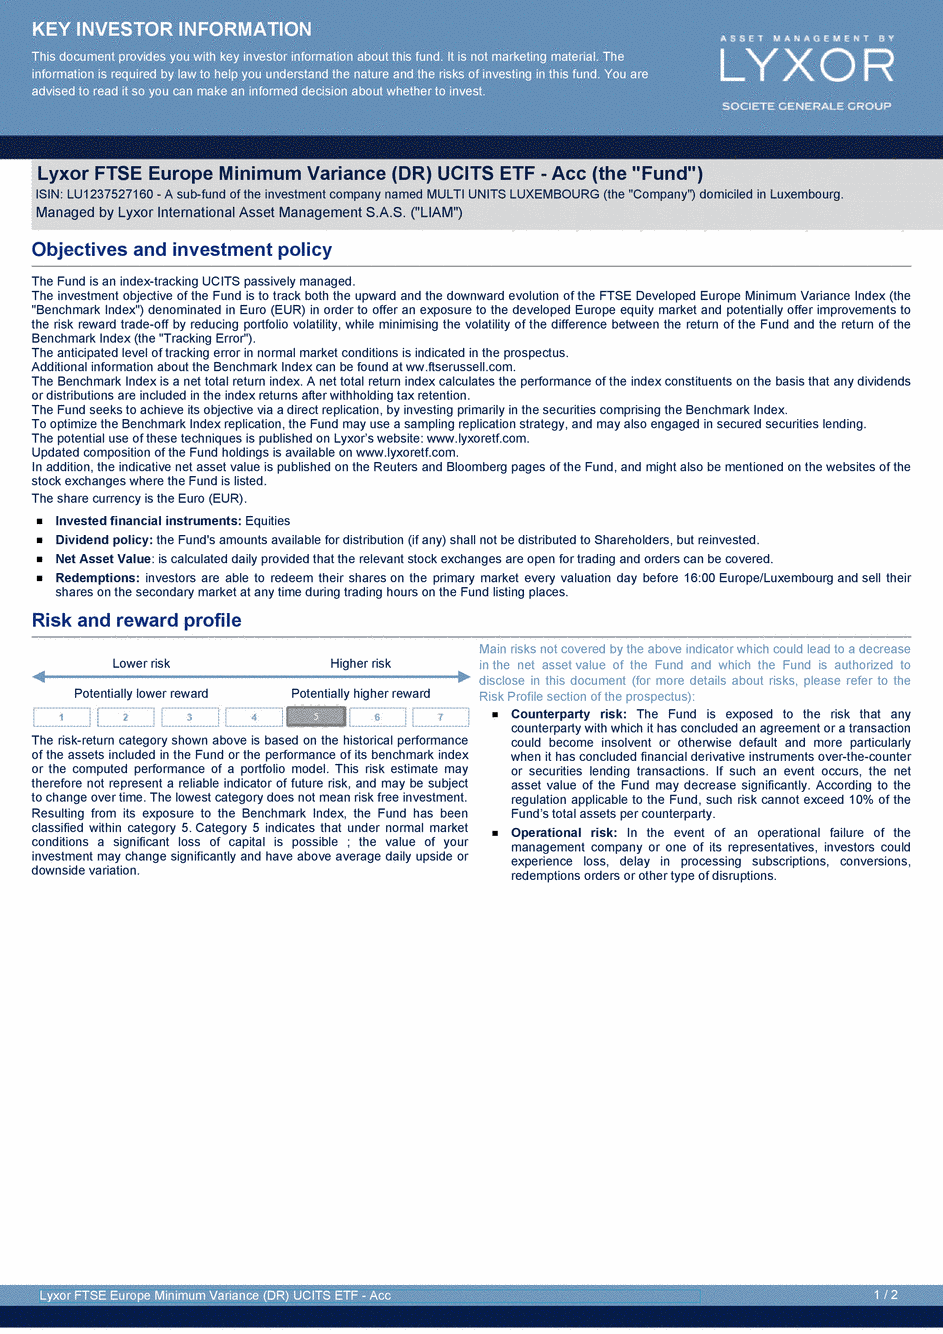 DICI Lyxor FTSE Europe Minimum Variance (DR) UCITS ETF - Acc - 19/02/2021 - Anglais